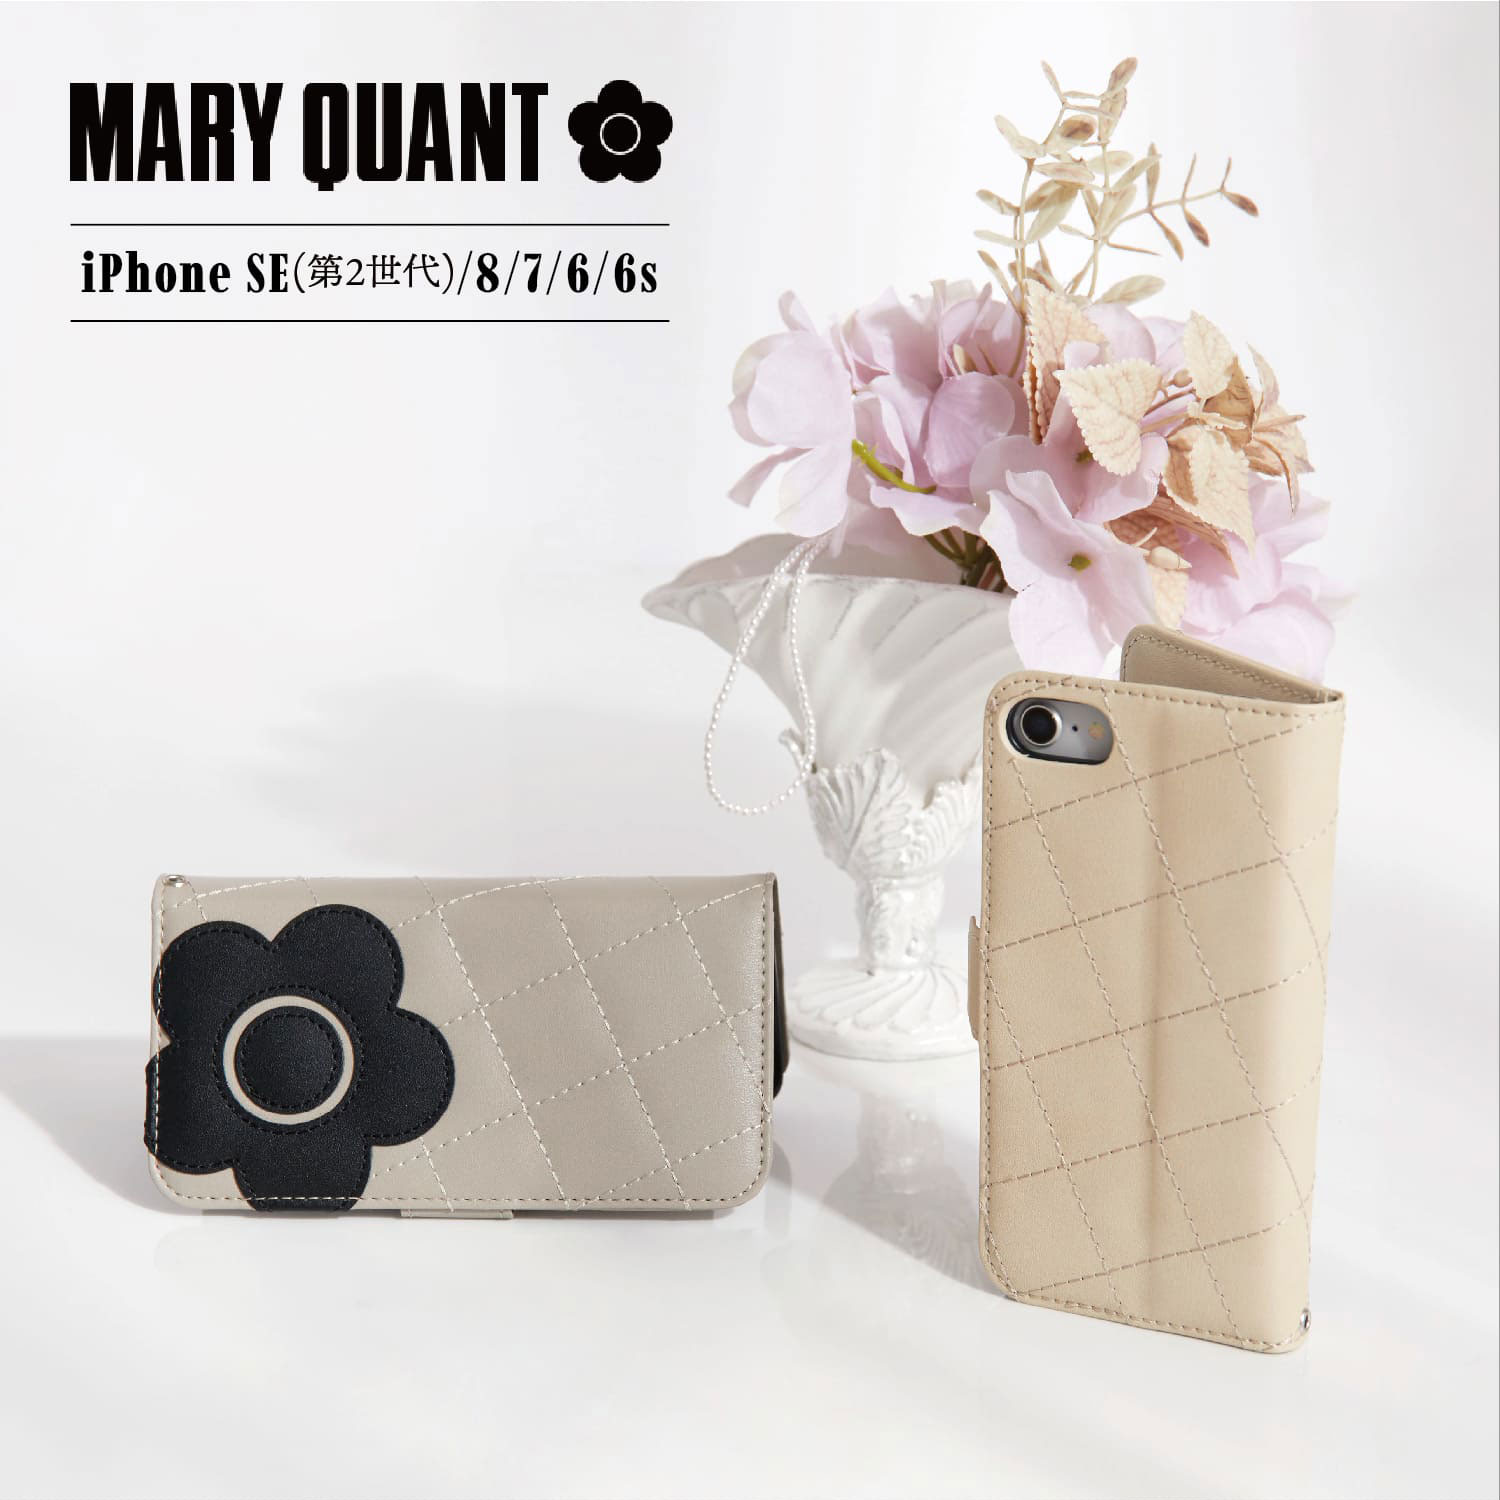 MARY QUANT PU QUILT LEATHER BOOK TYPE CASE マリークヮント iPhone SE 8 ケース スマホケース 携帯 アイフォン 手帳型 レディース マリクワ IPSE-MQ01 母の日